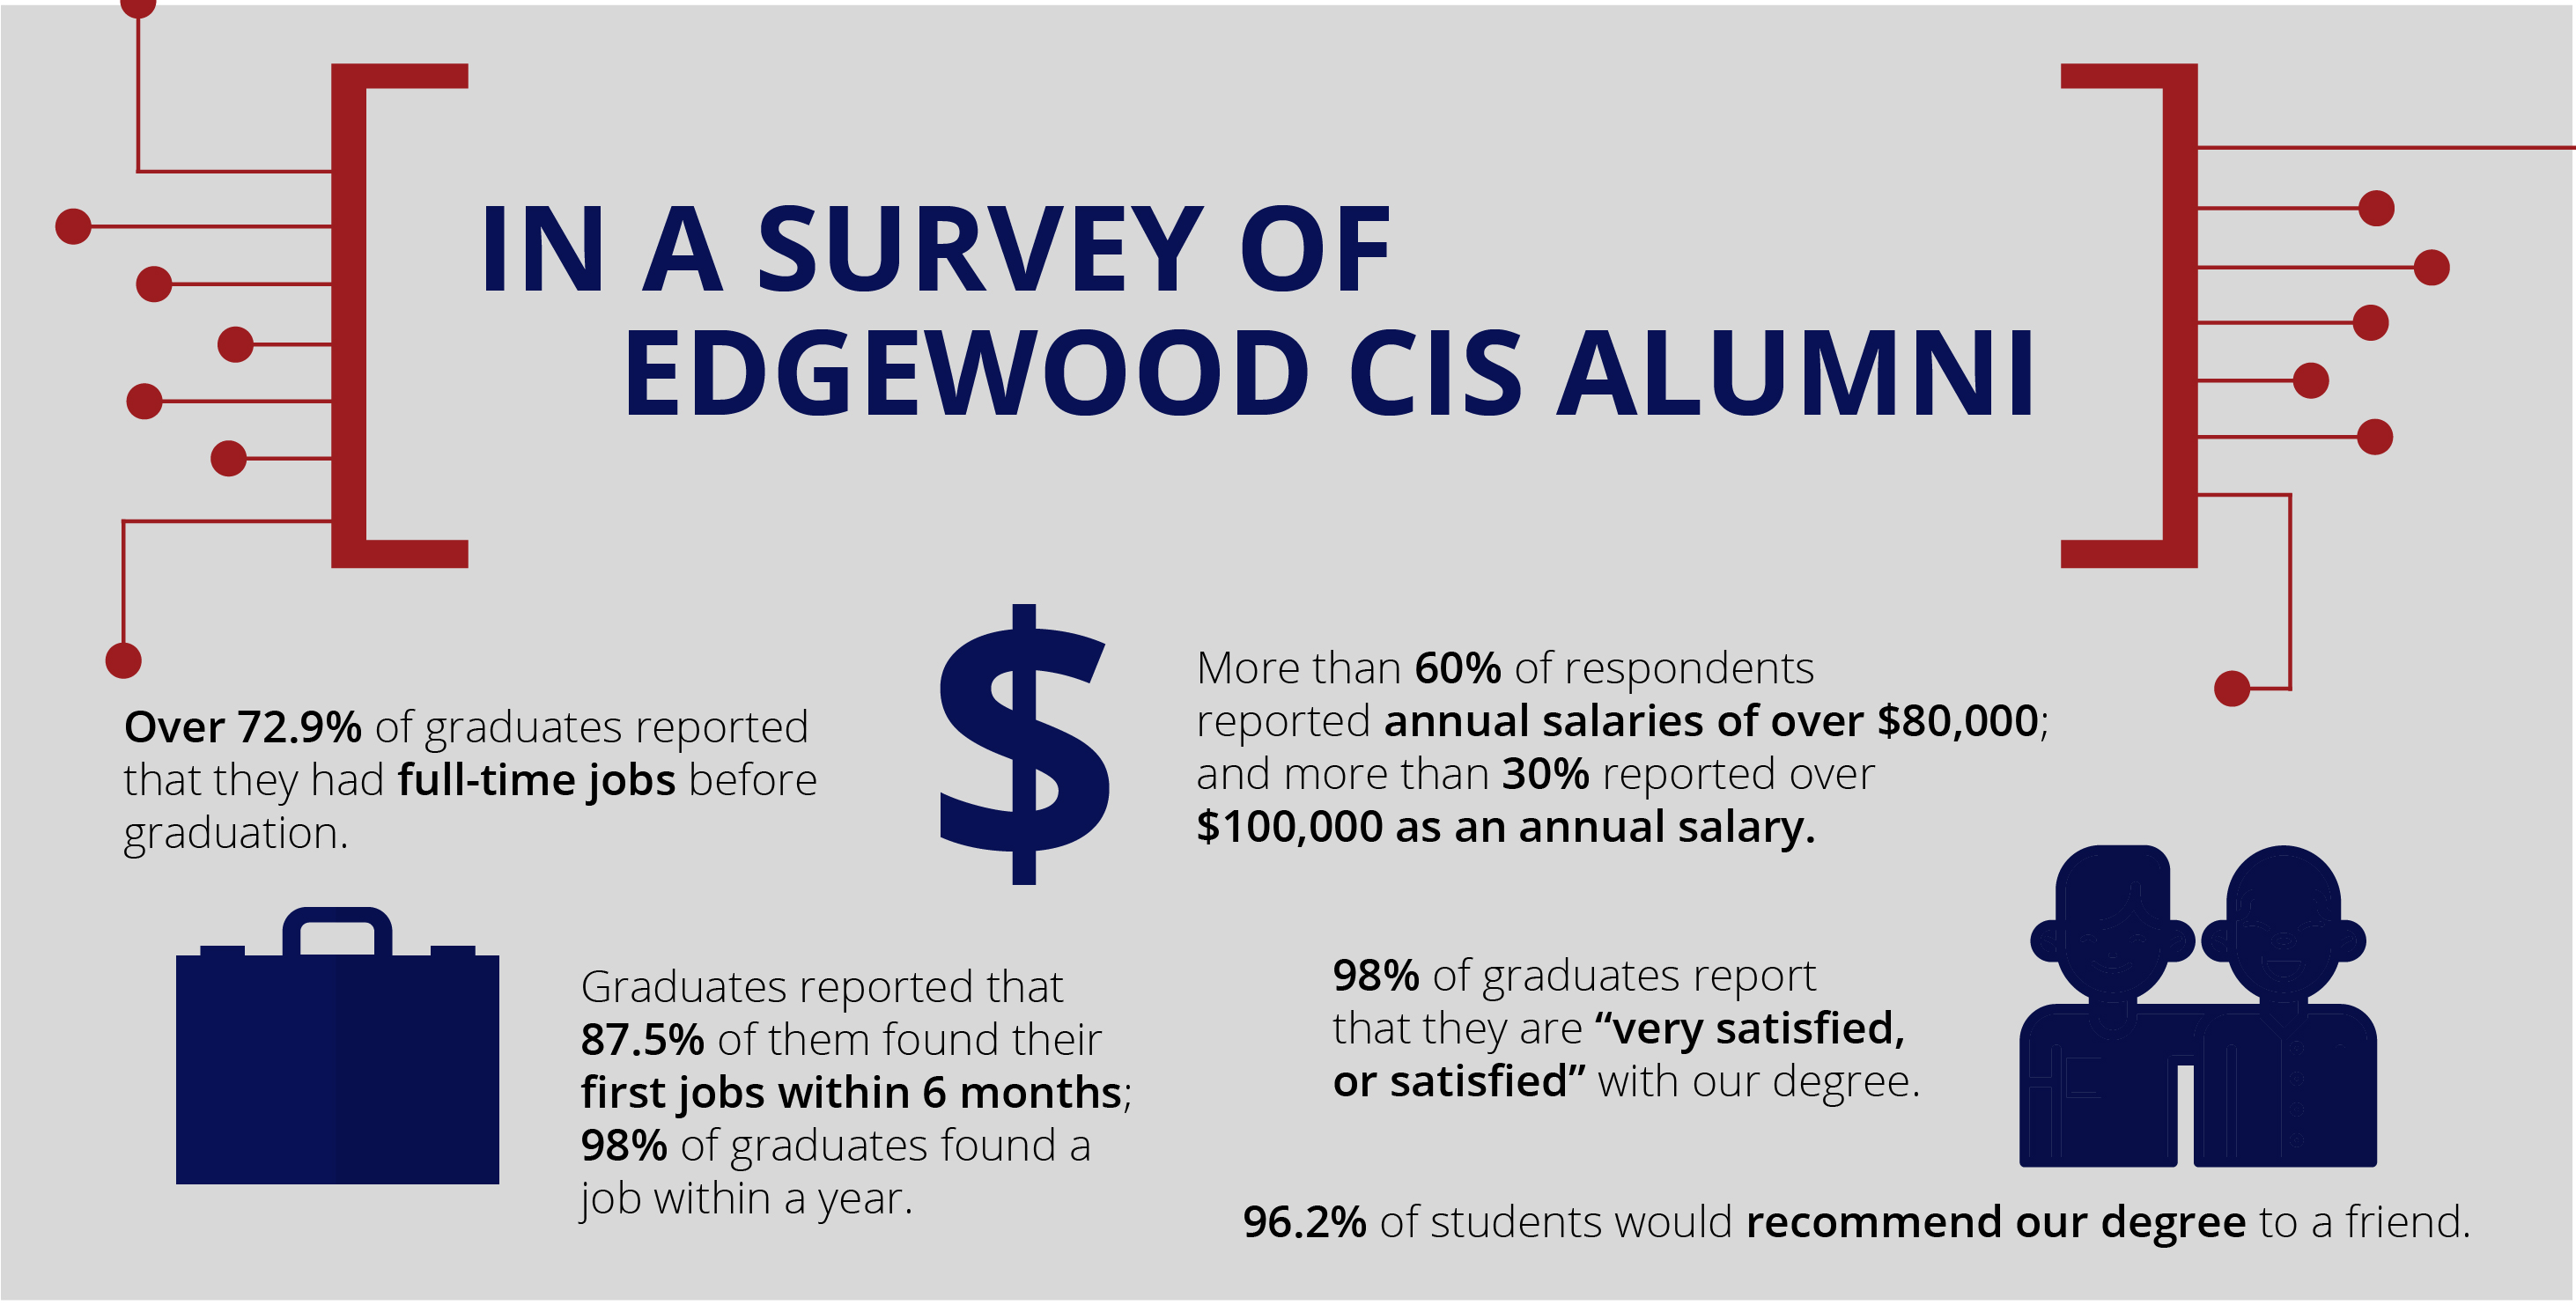 In a survey of Edgewood CIS Alumni